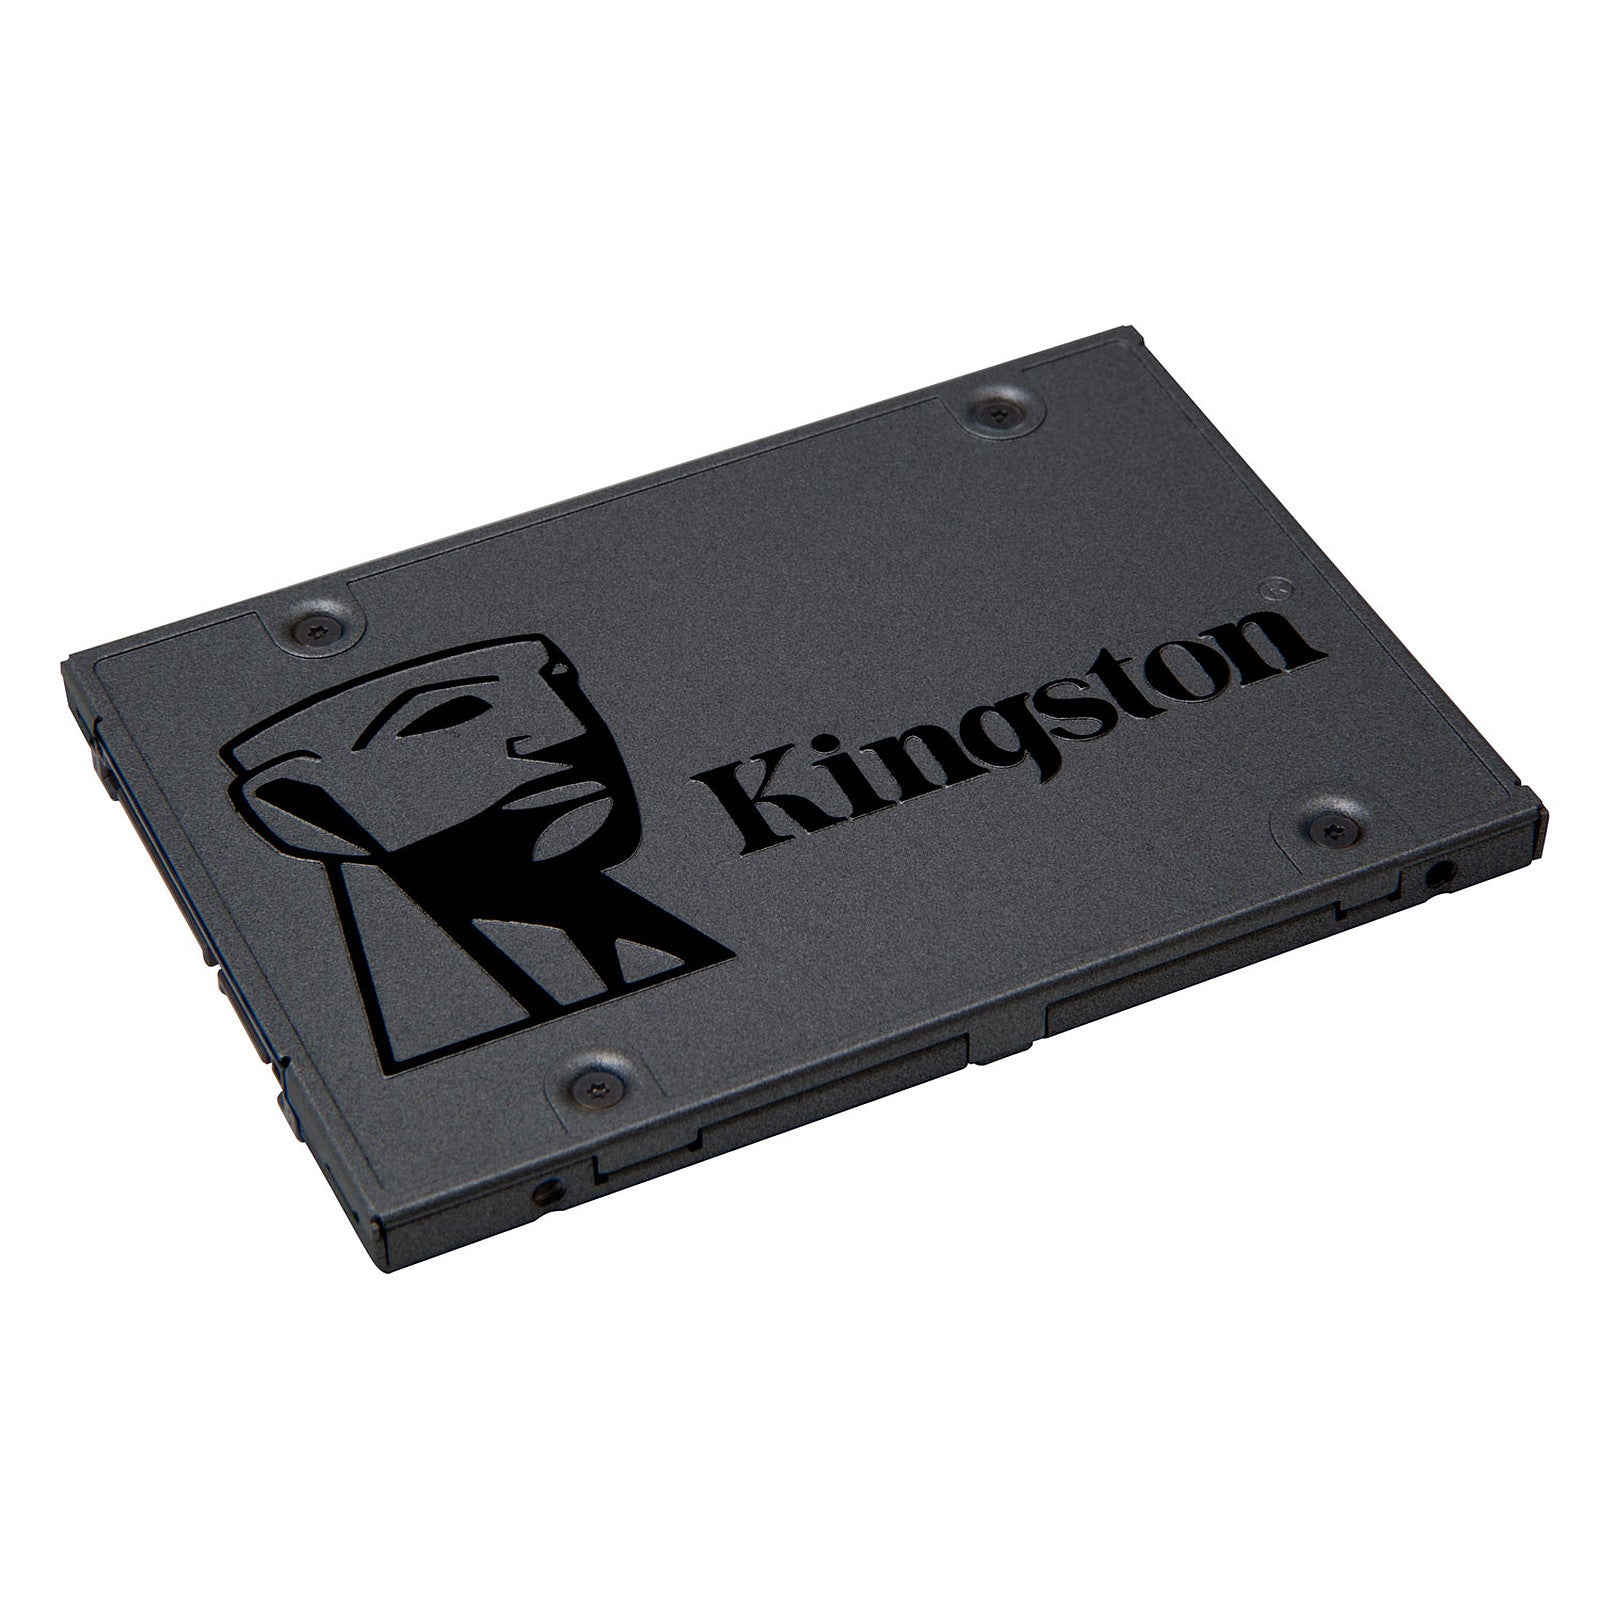 Kingston - A400 - Disque SSD 960Gb